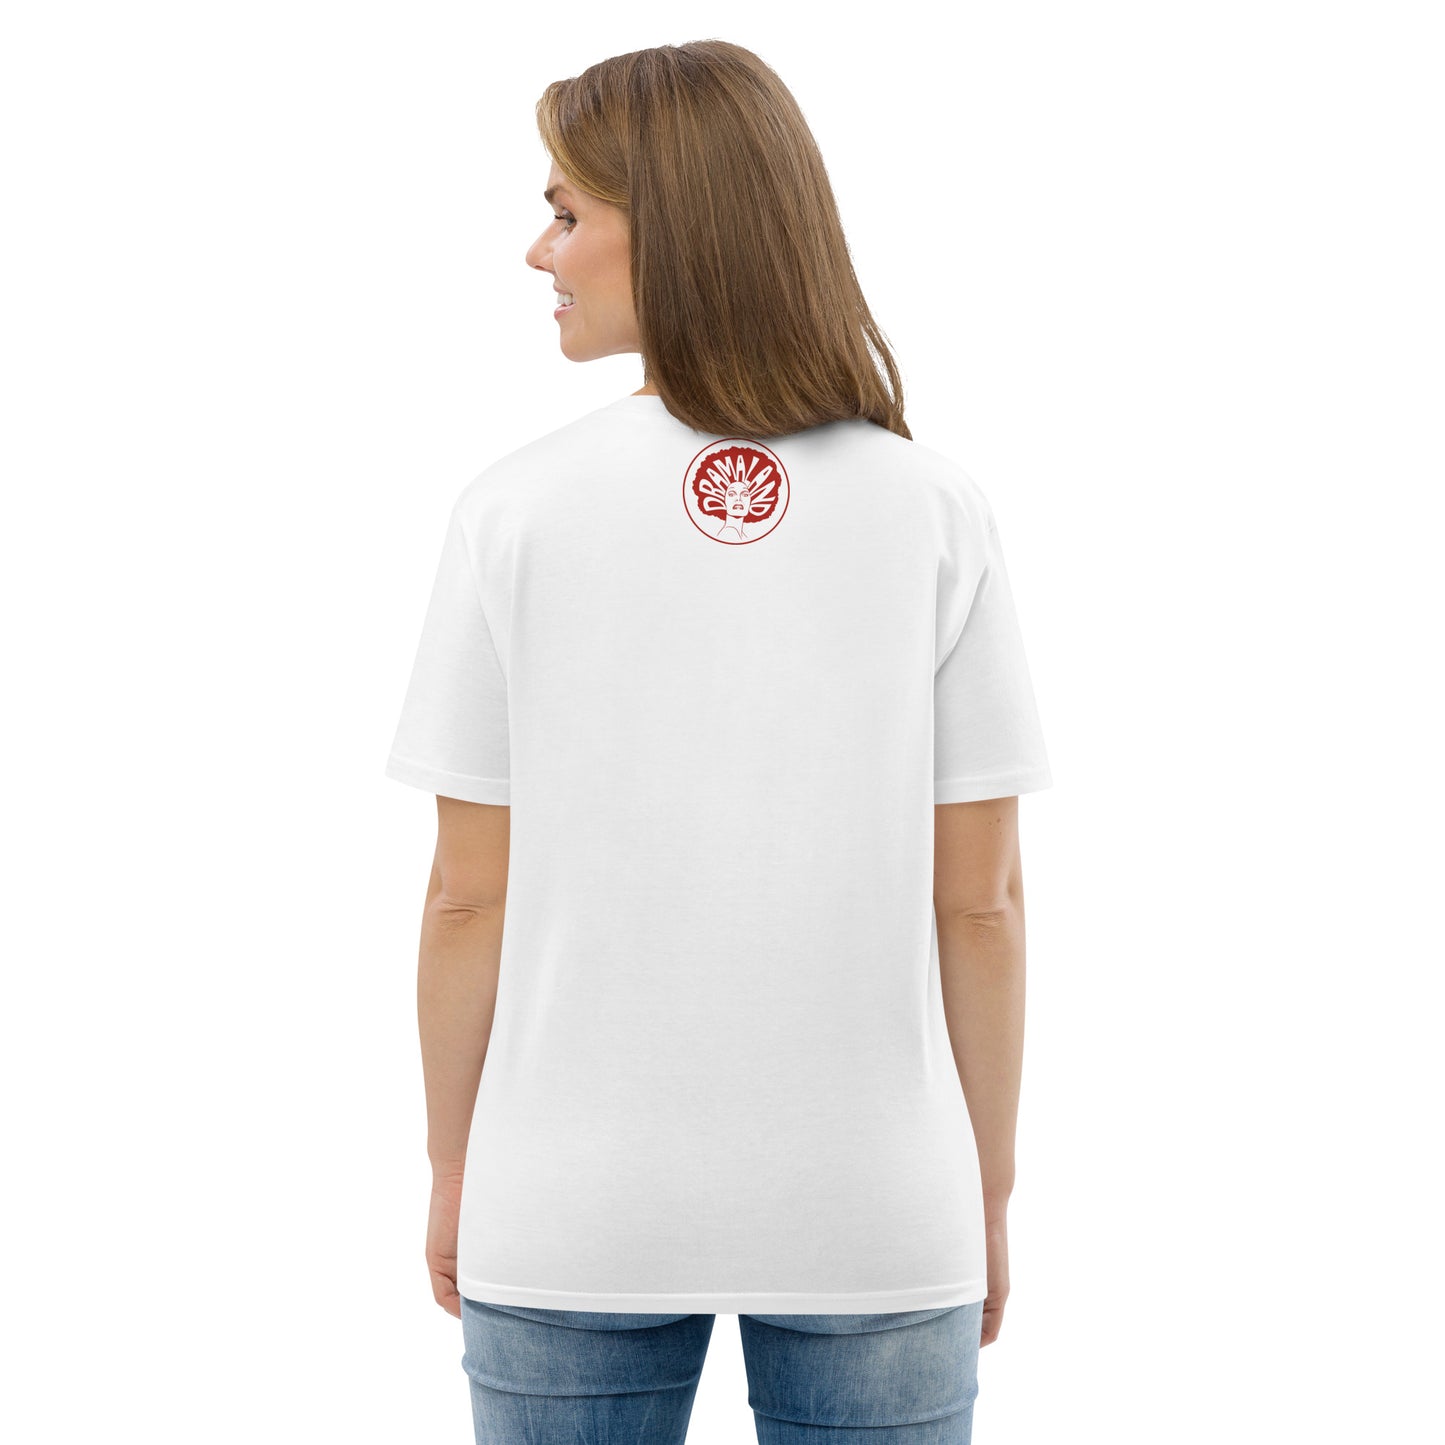 Size S - White short-sleeved T-shirt AMY WINEHOUSE